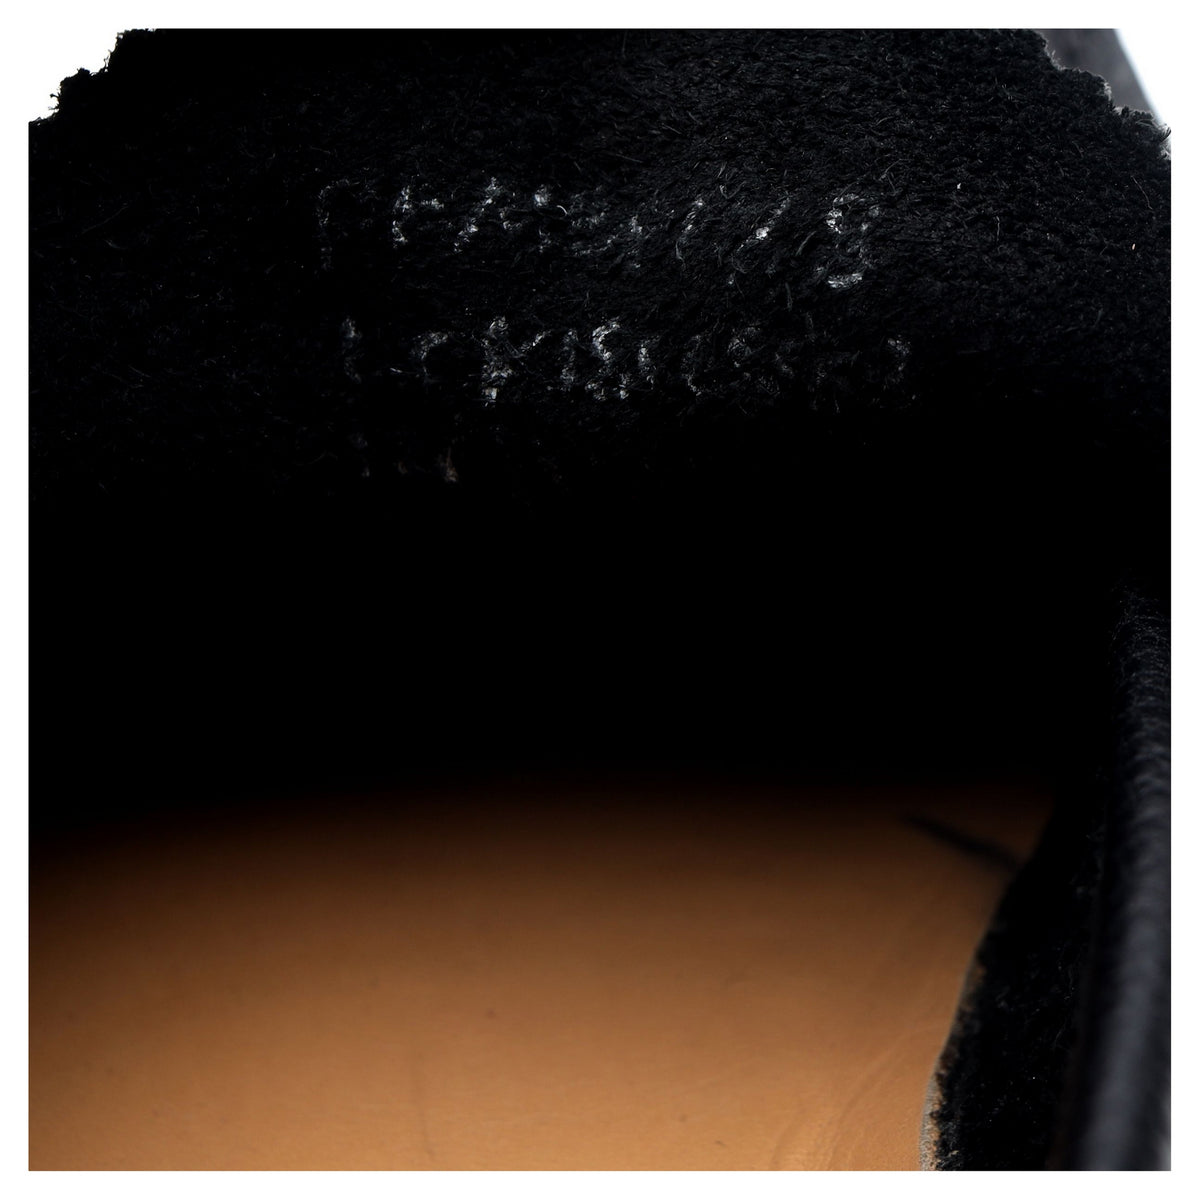 &#39;Pembrey&#39; Black Leather Loafers UK 8 F